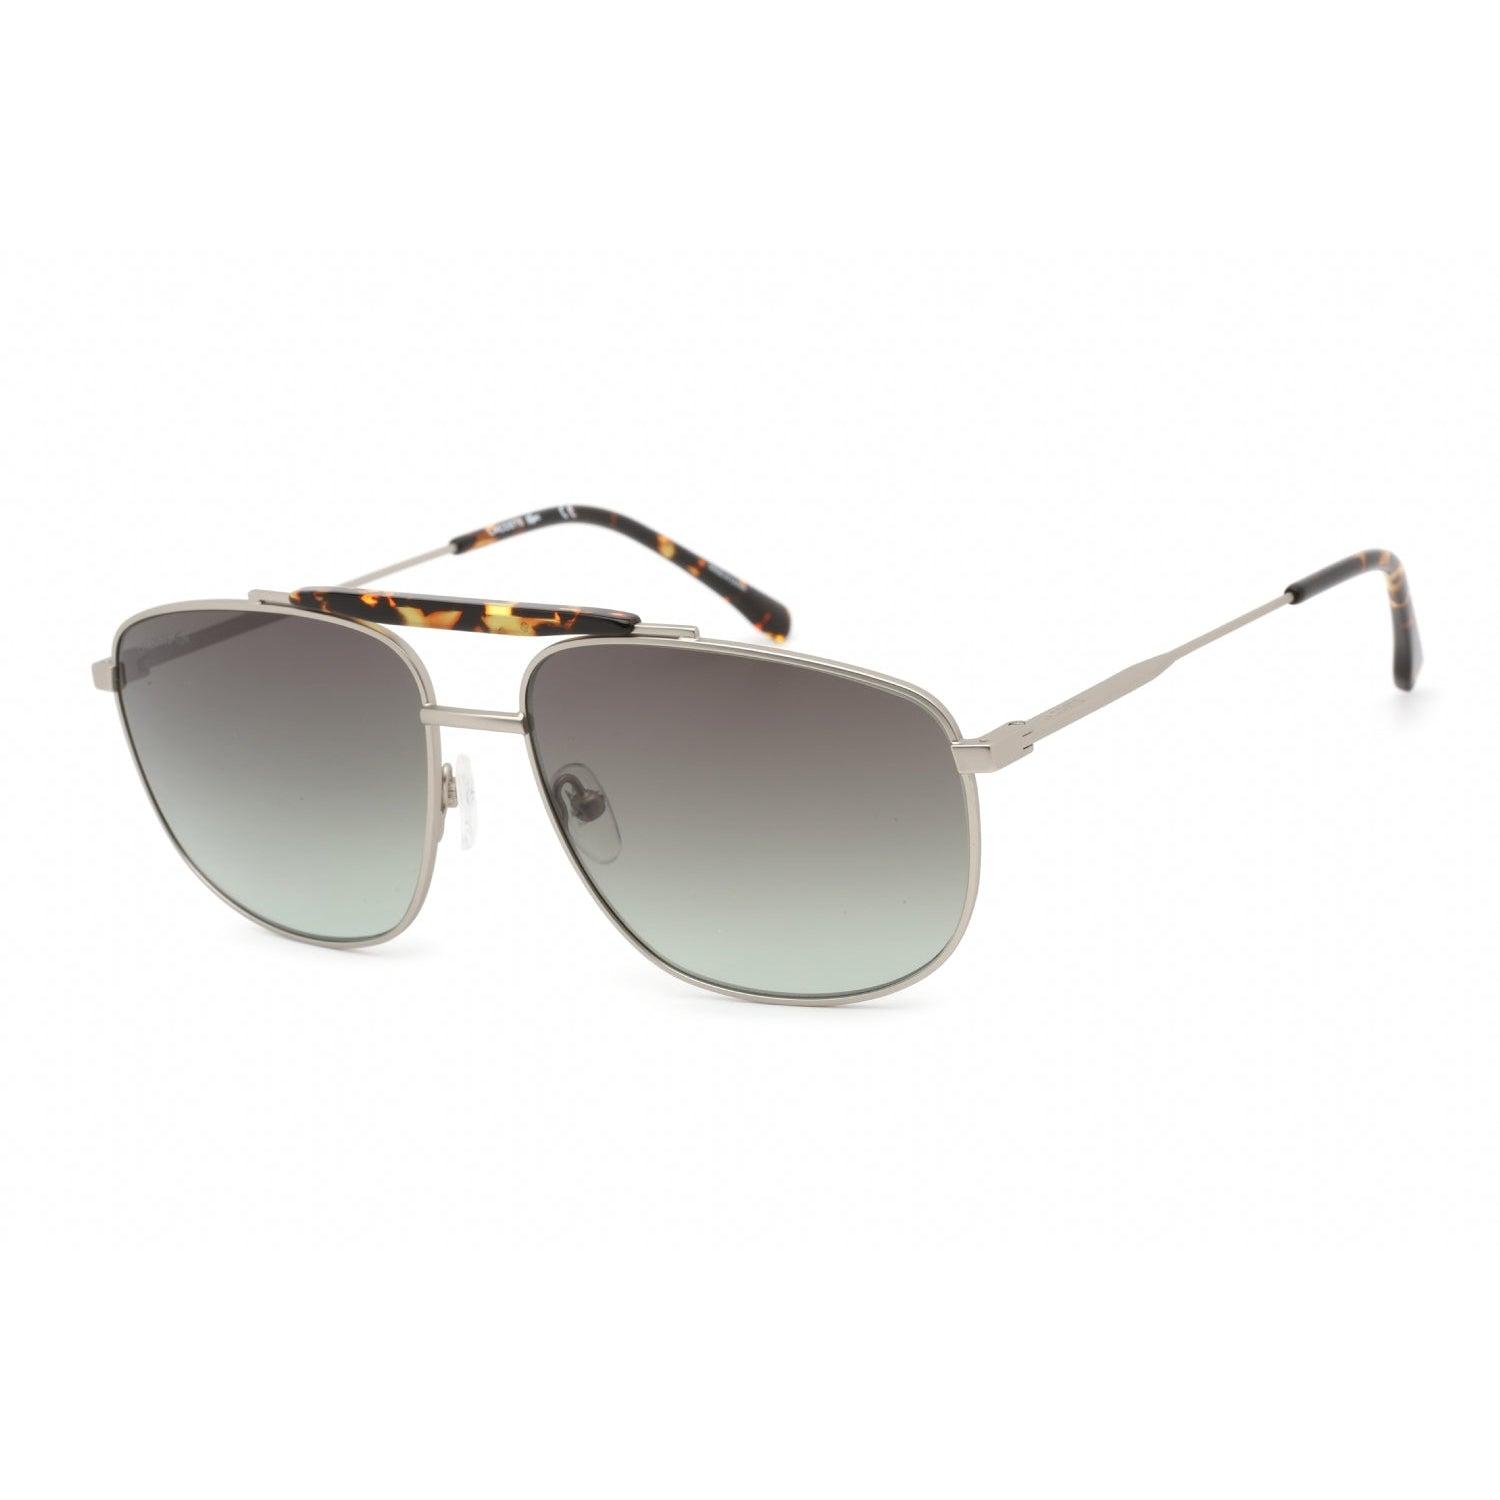 Lacoste L246s Sunglasses Matte Light Grey / Grey Gradient in Metallic ...